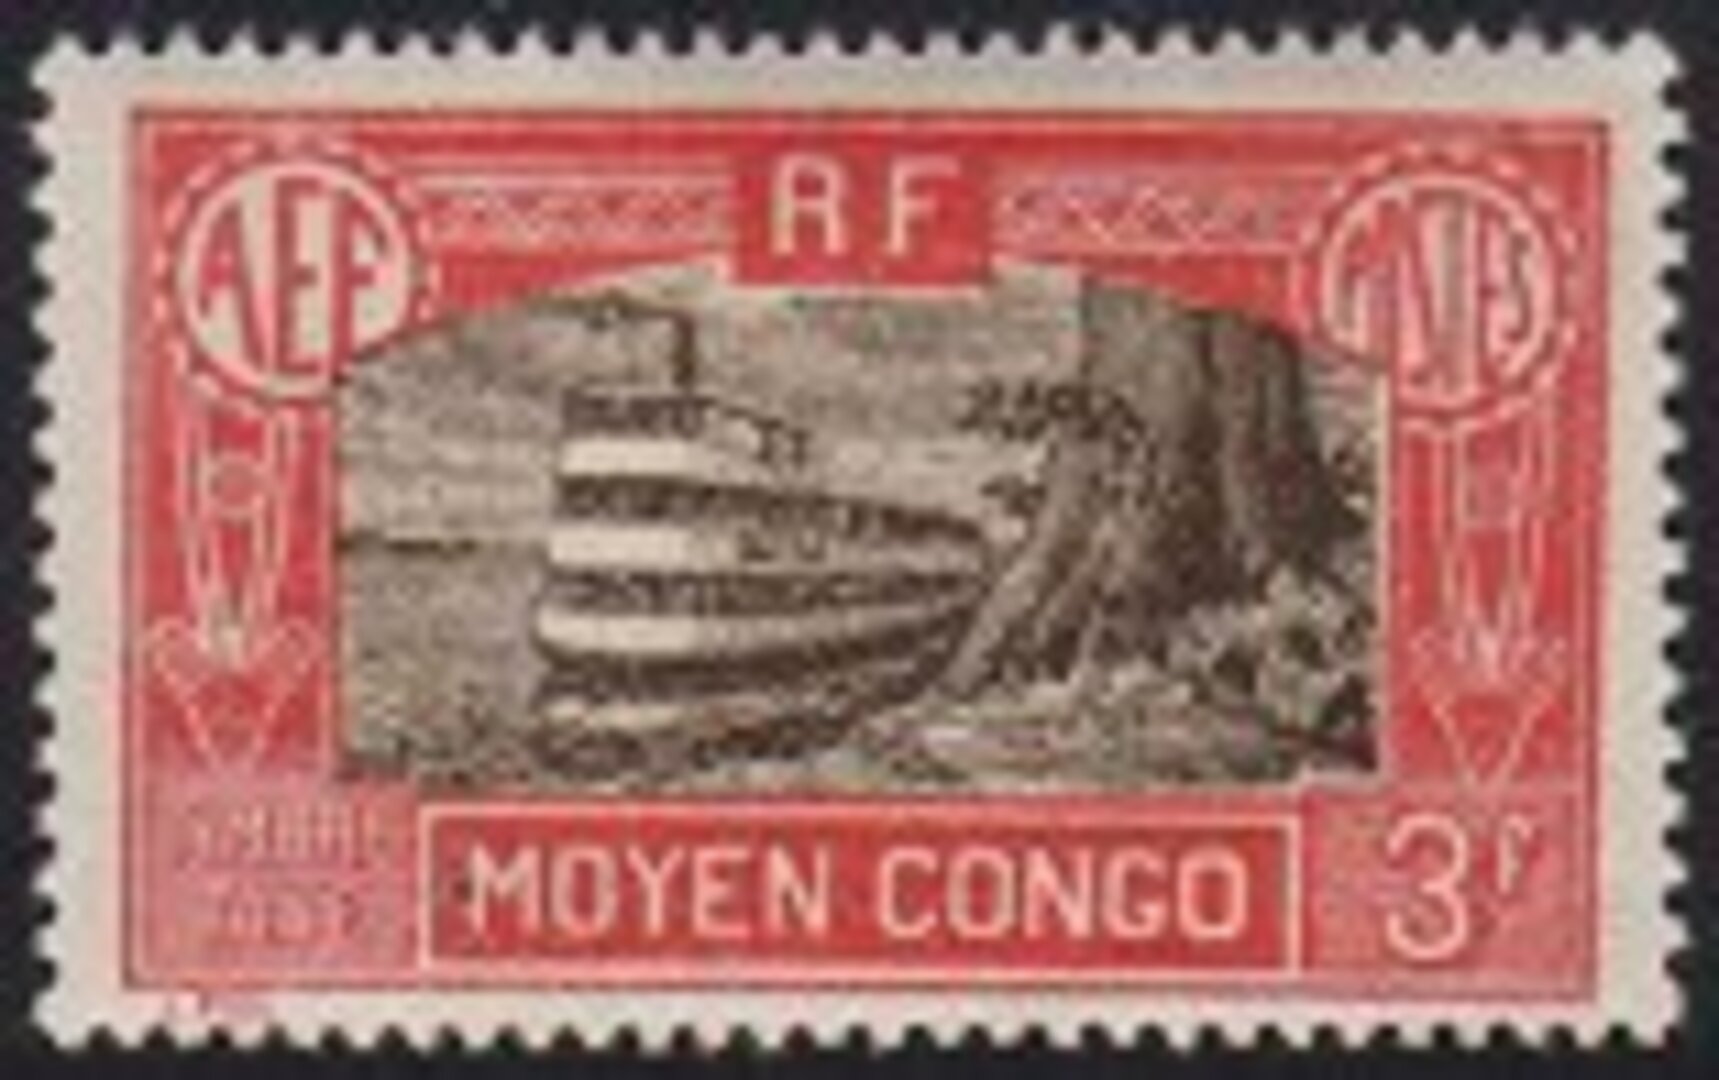 Moyen Congo stamp